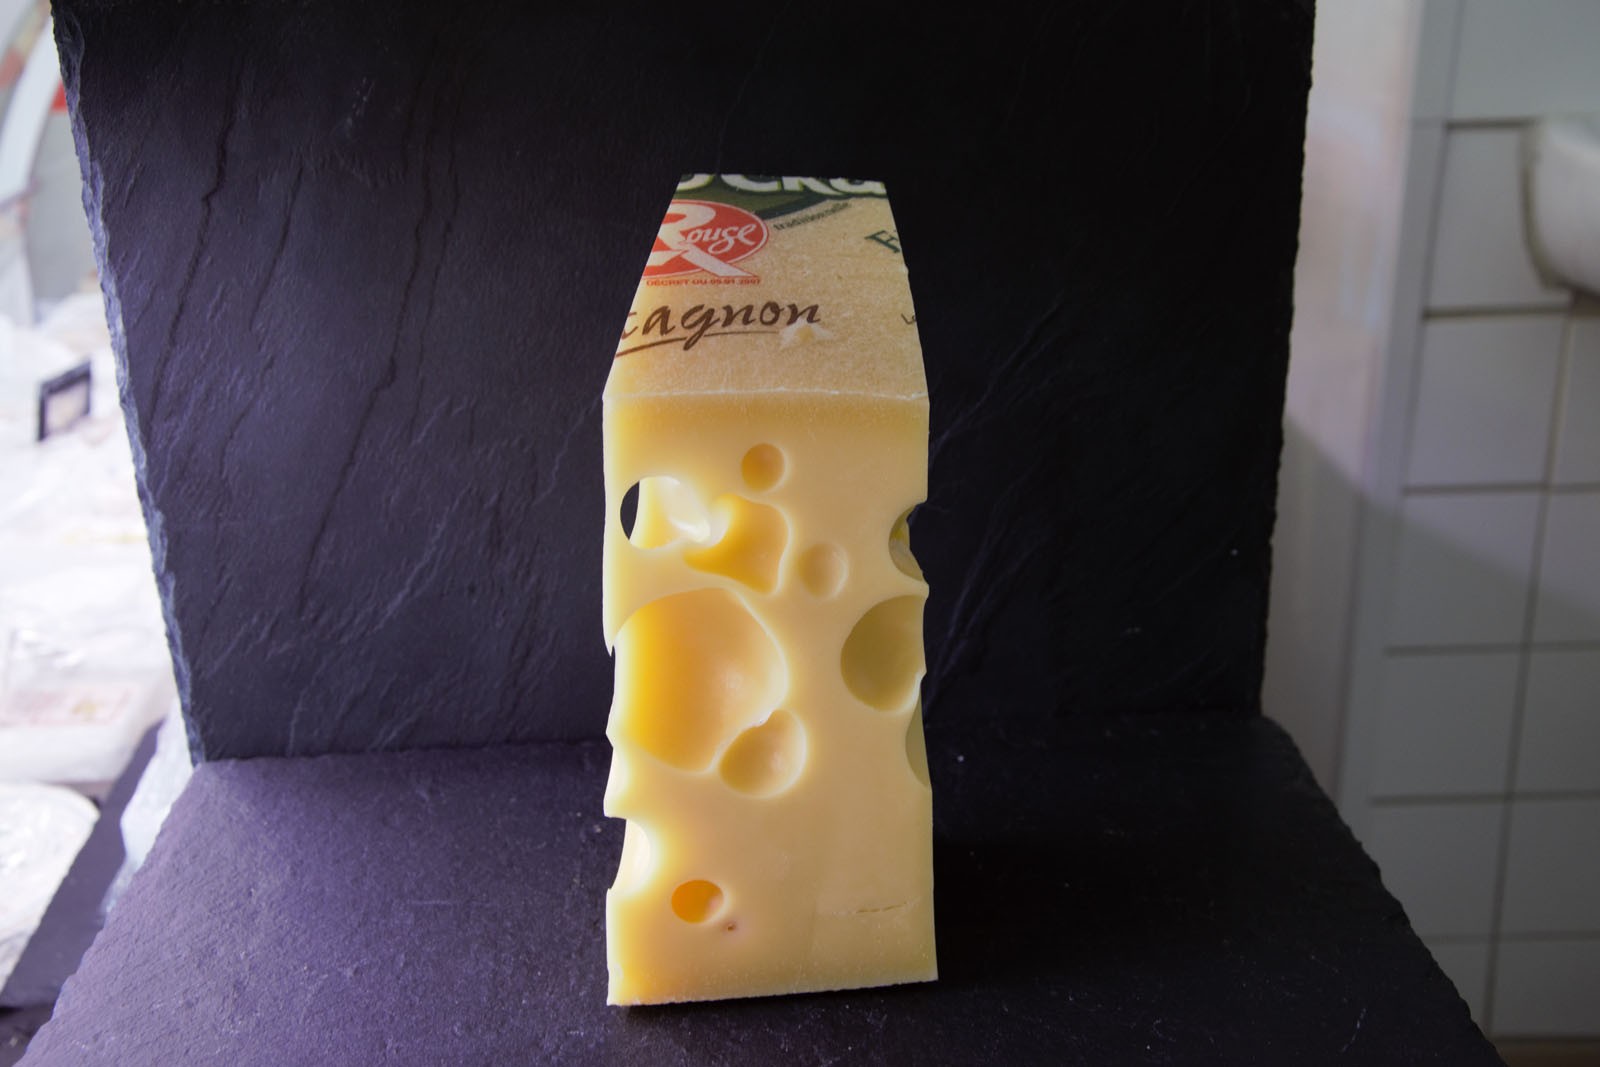 Achat Emmental Grand Cru en ligne - Vente de fromages 